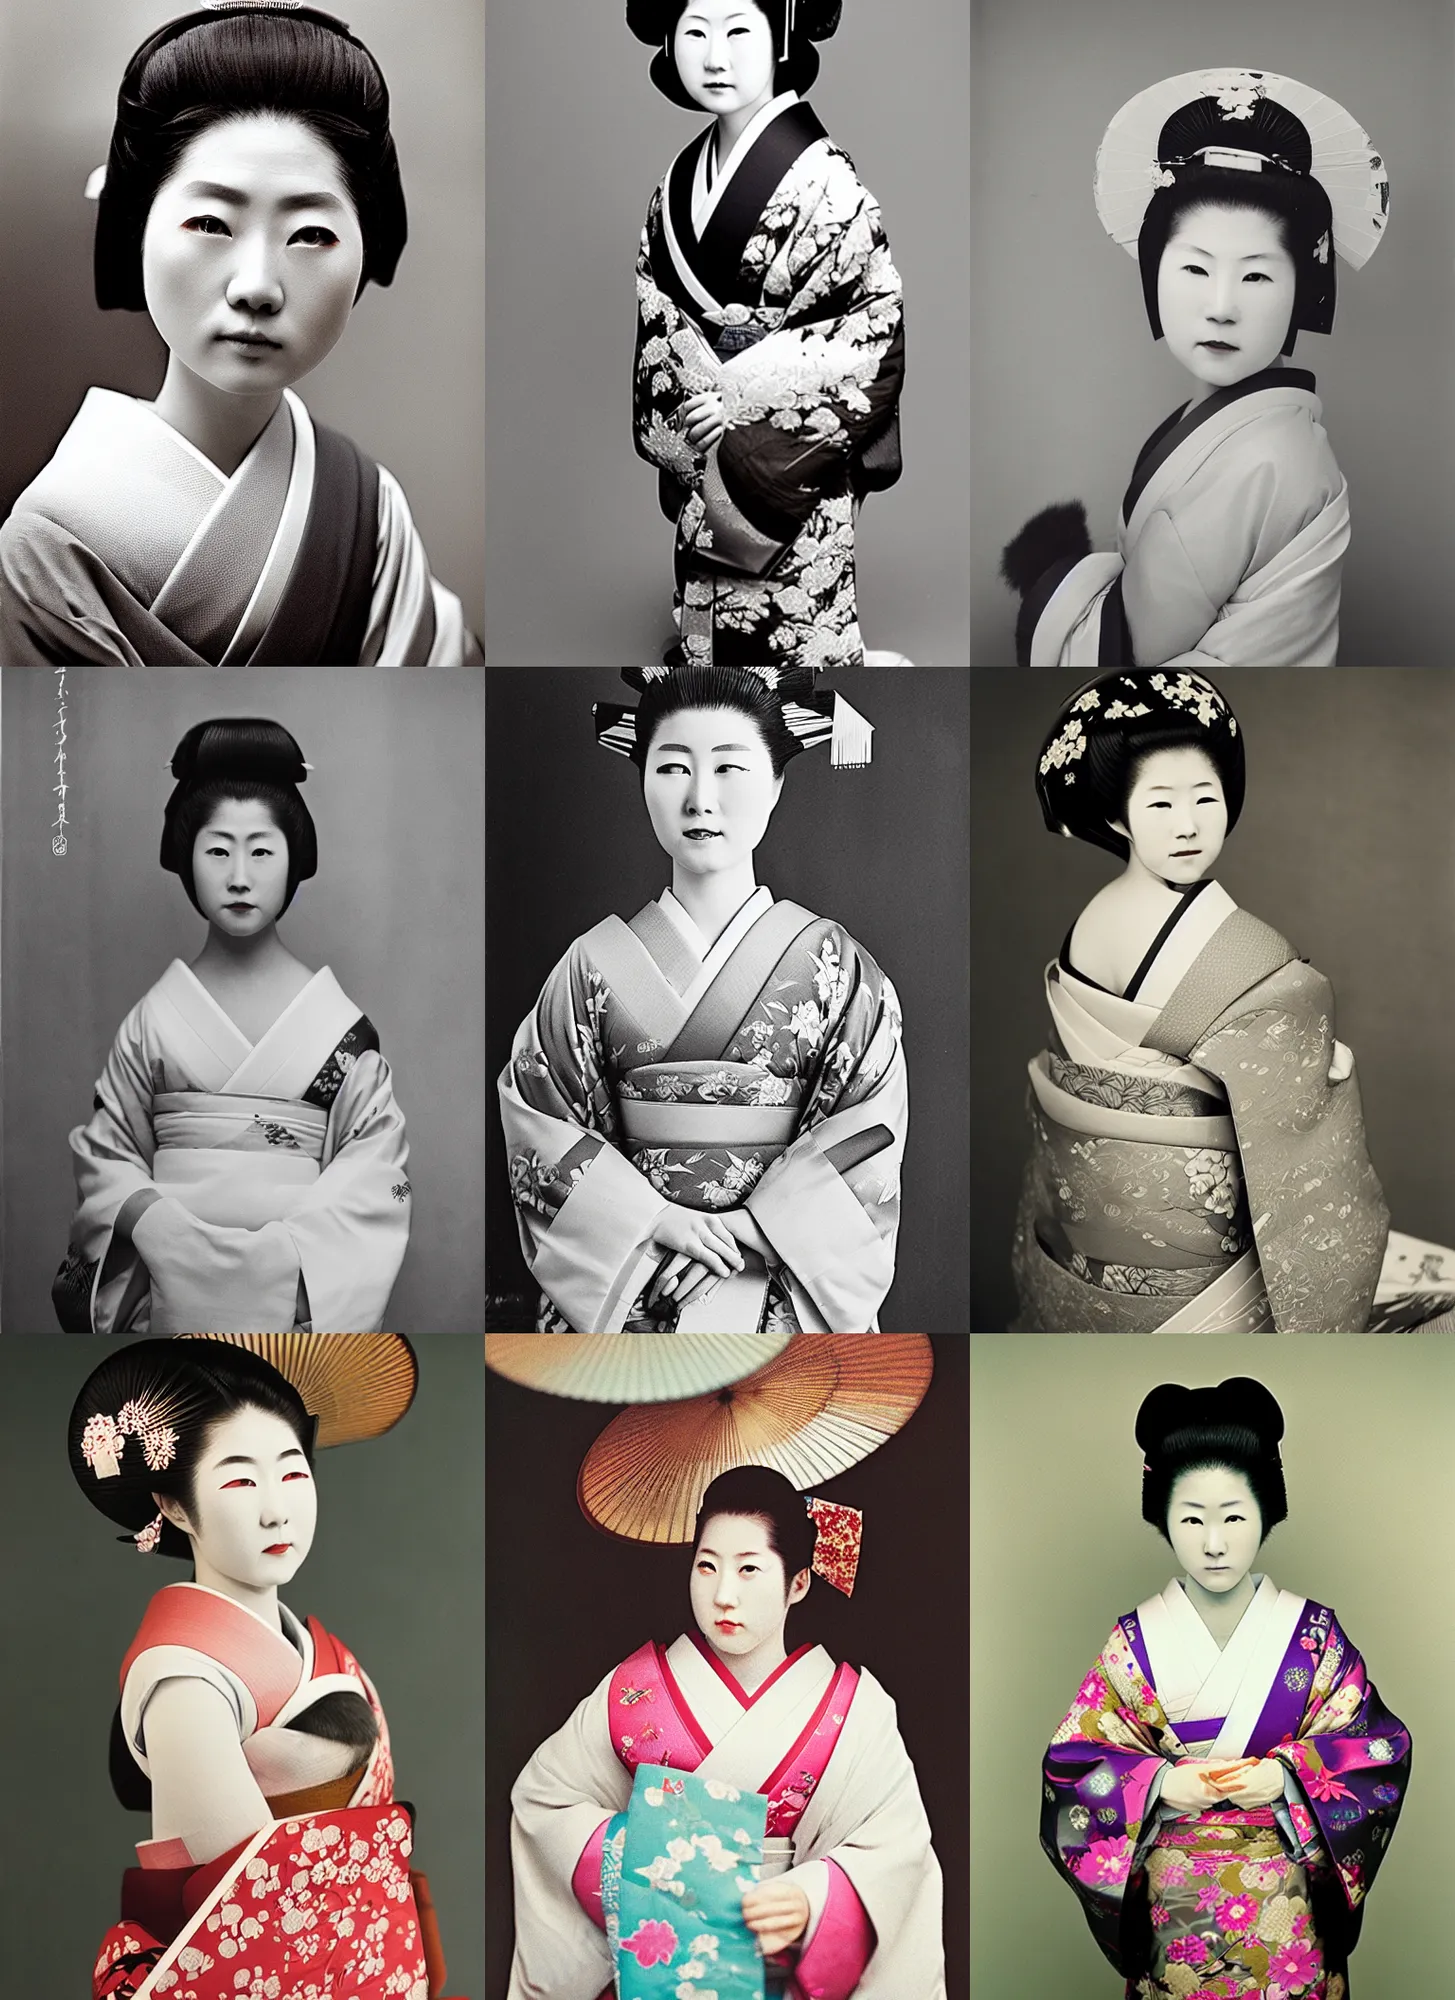 Prompt: Portrait Photograph of a Japanese Geisha Maxwell Chrome 200